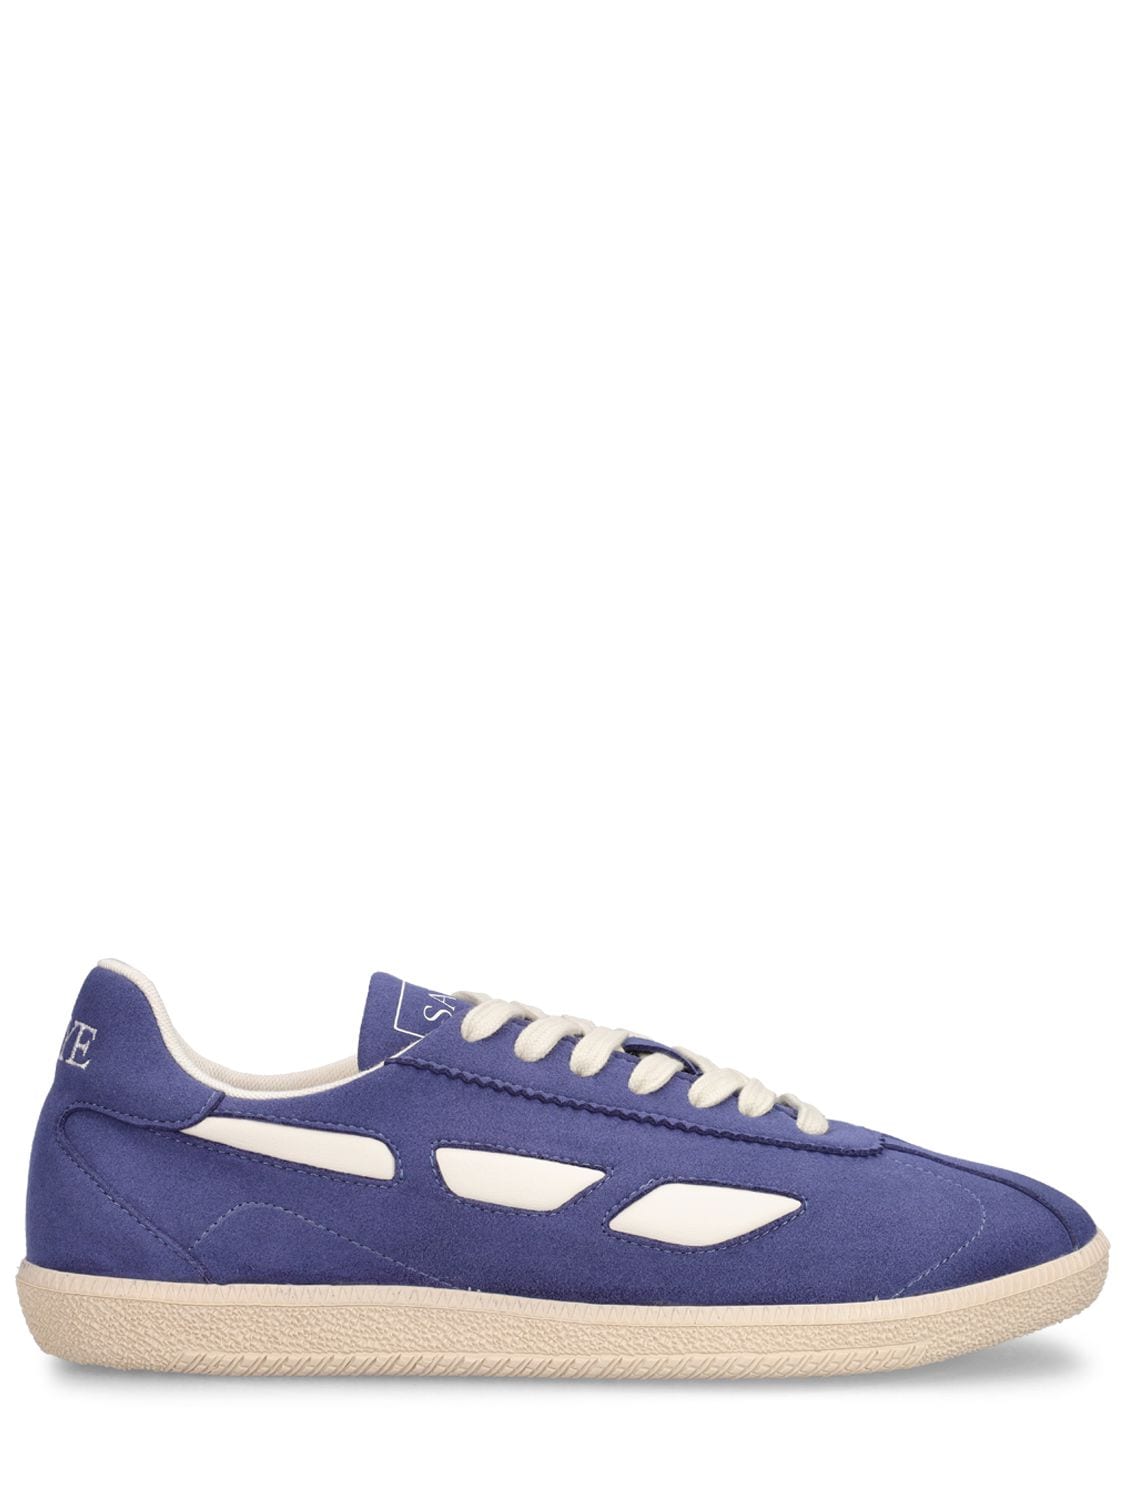 Saye Modelo '70 Vegan Sneakers In Blue At Urban Outfitters